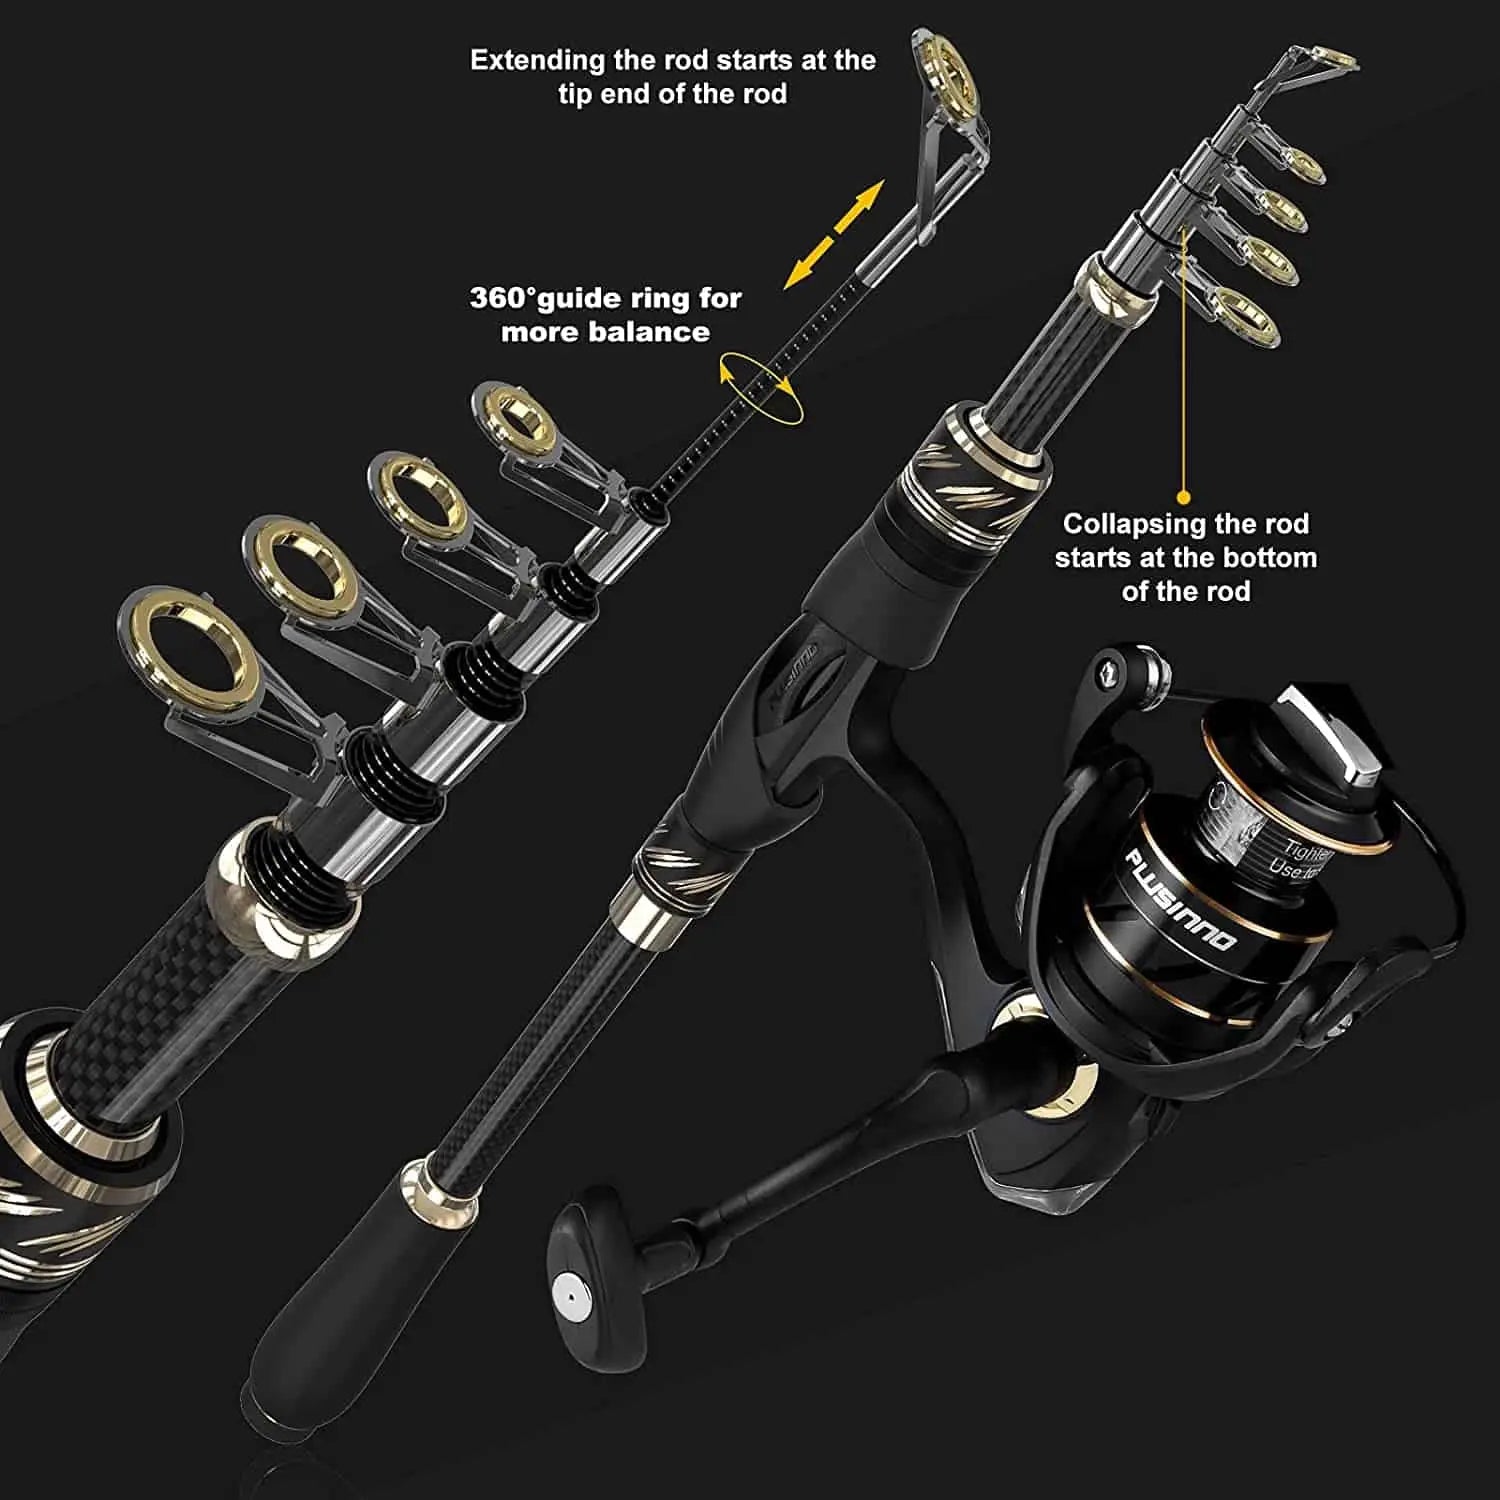 PLUSINNO E9 Telescopic Fishing Rods Carbon Fiber with Reel Combo